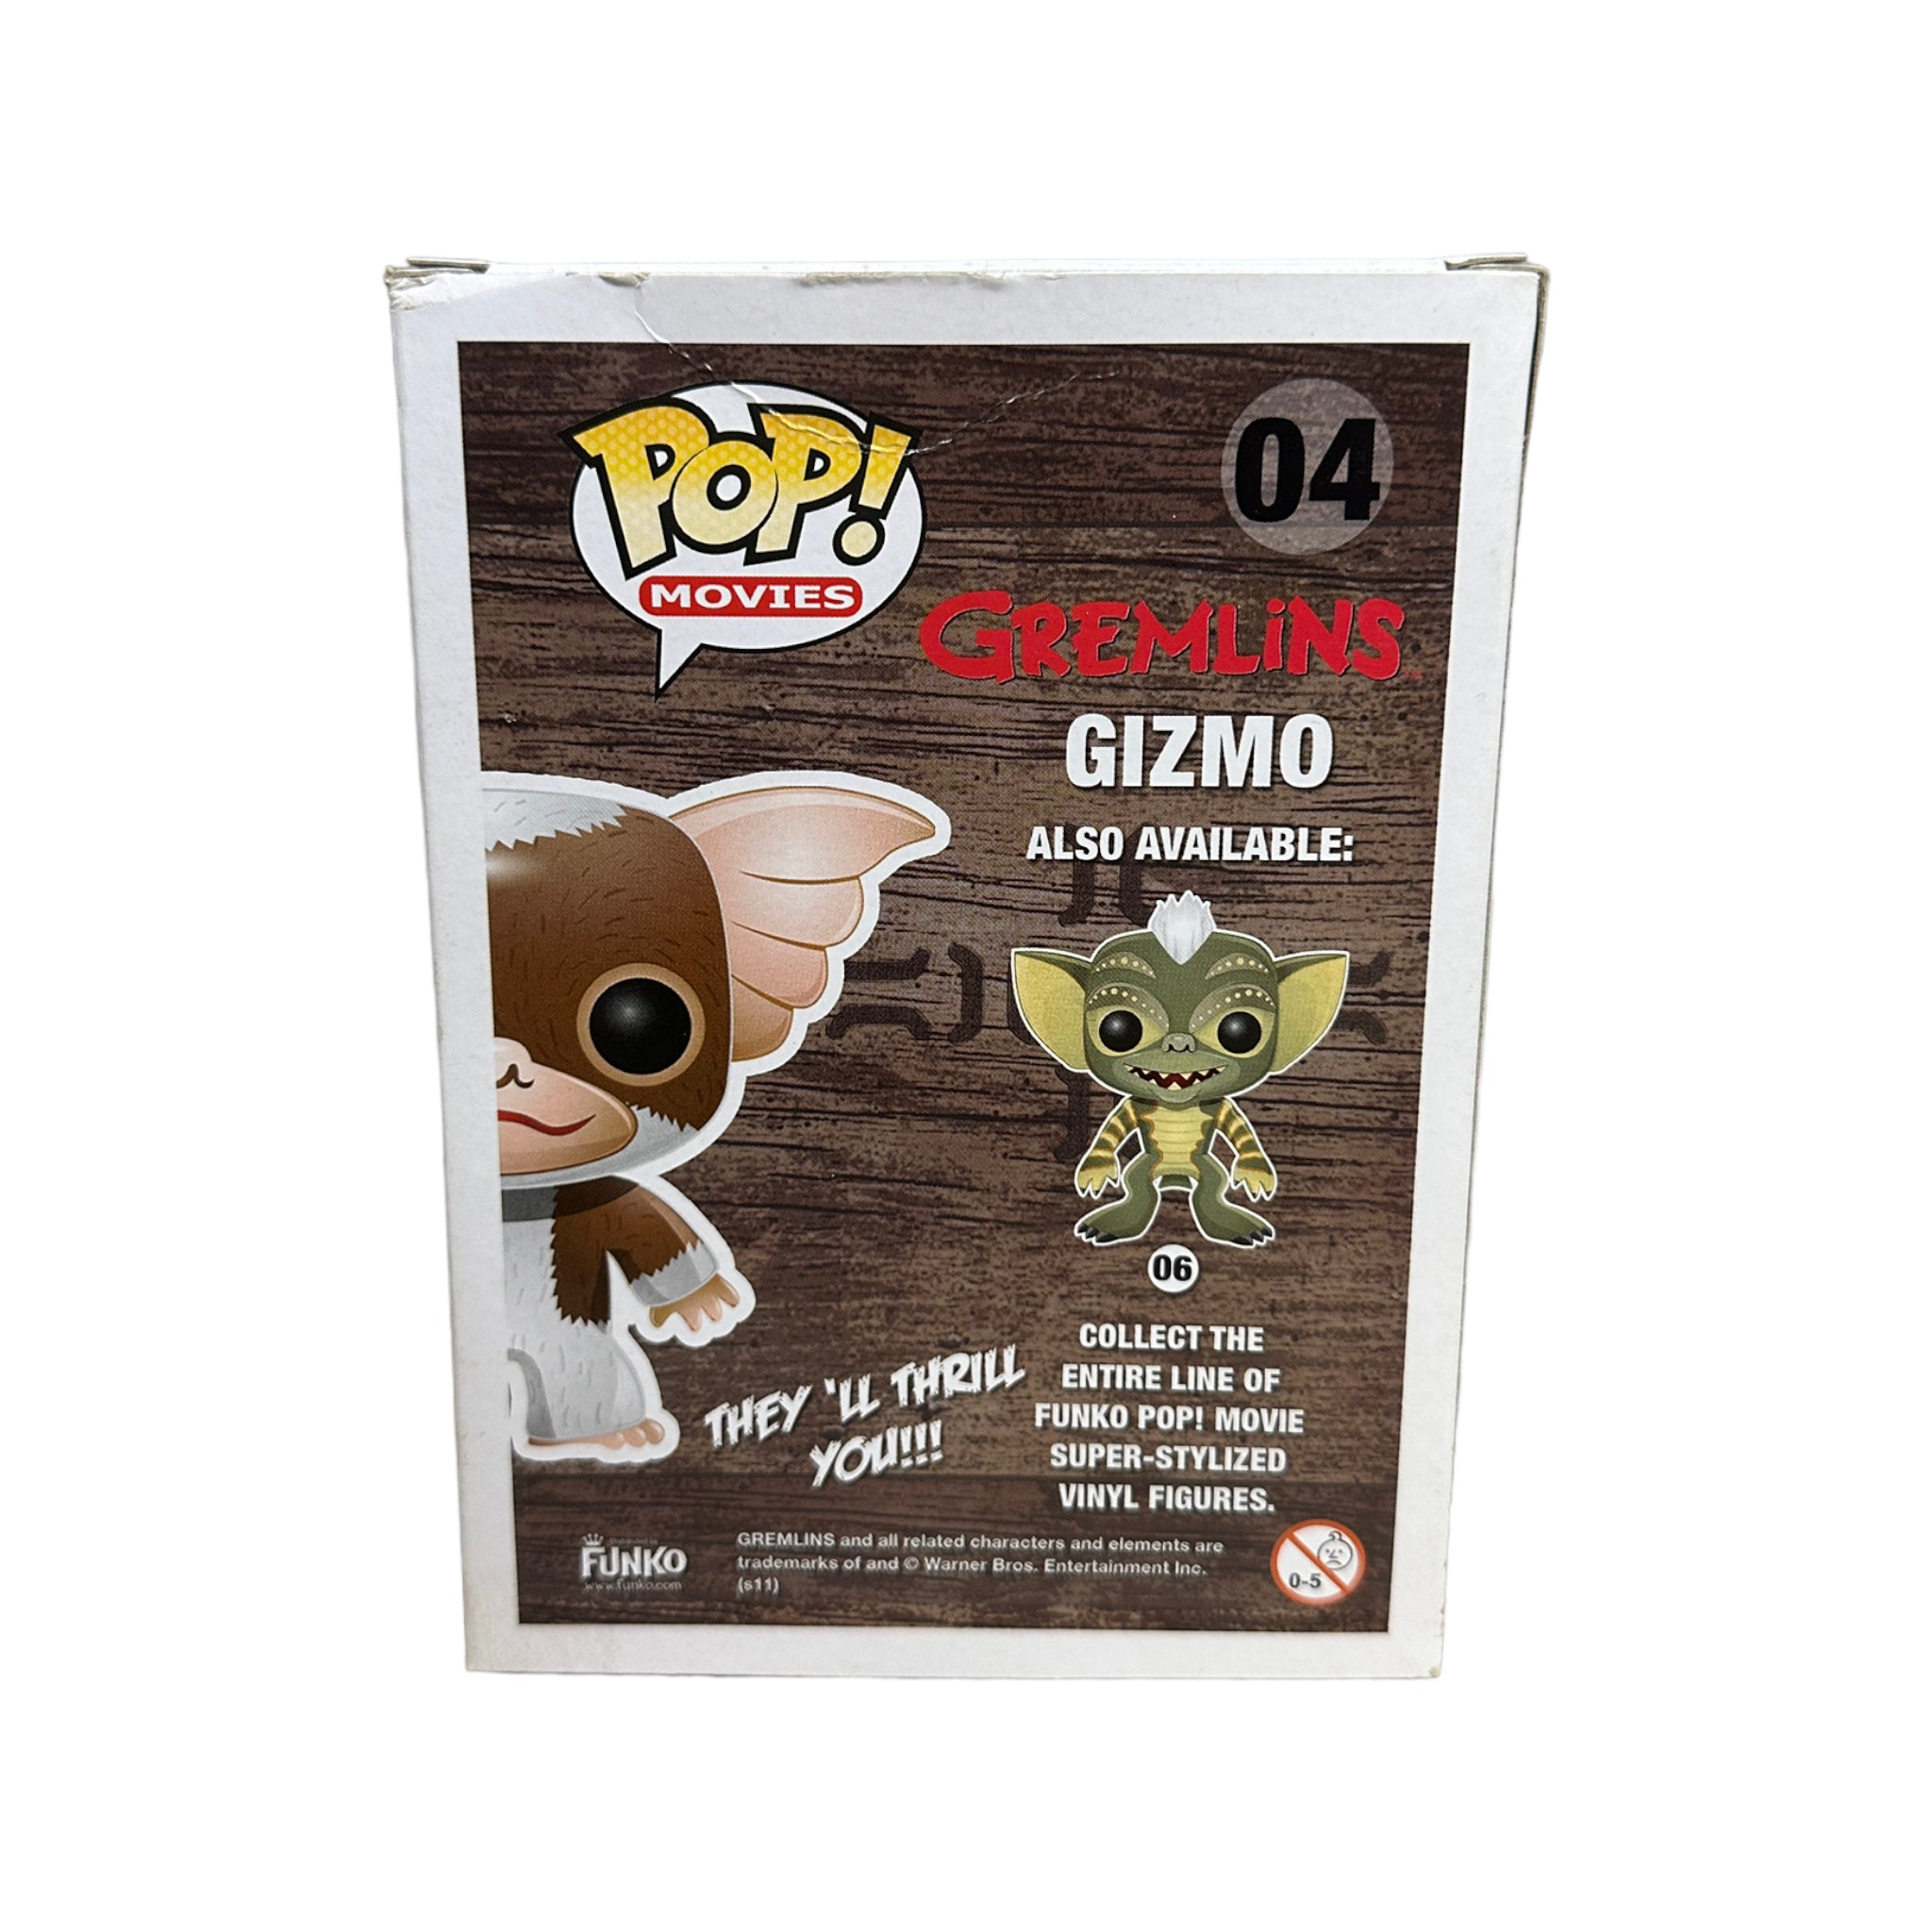 Gizmo #04 (Flocked) Funko Pop! - Gremlins - SDCC 2011 Exclusive LE480 Pcs - Condition 6/10